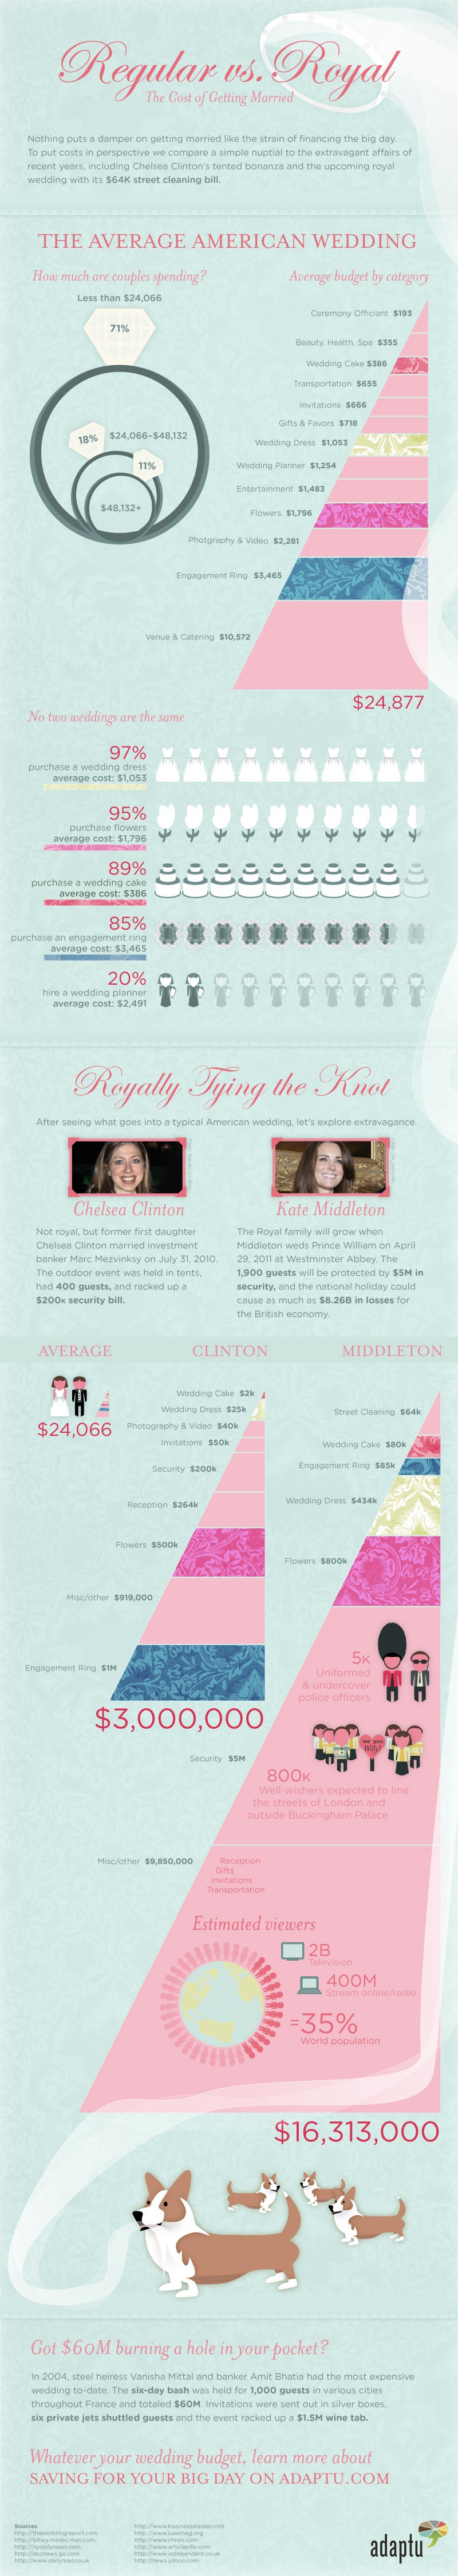 The Royal Wedding Statistics Infographic